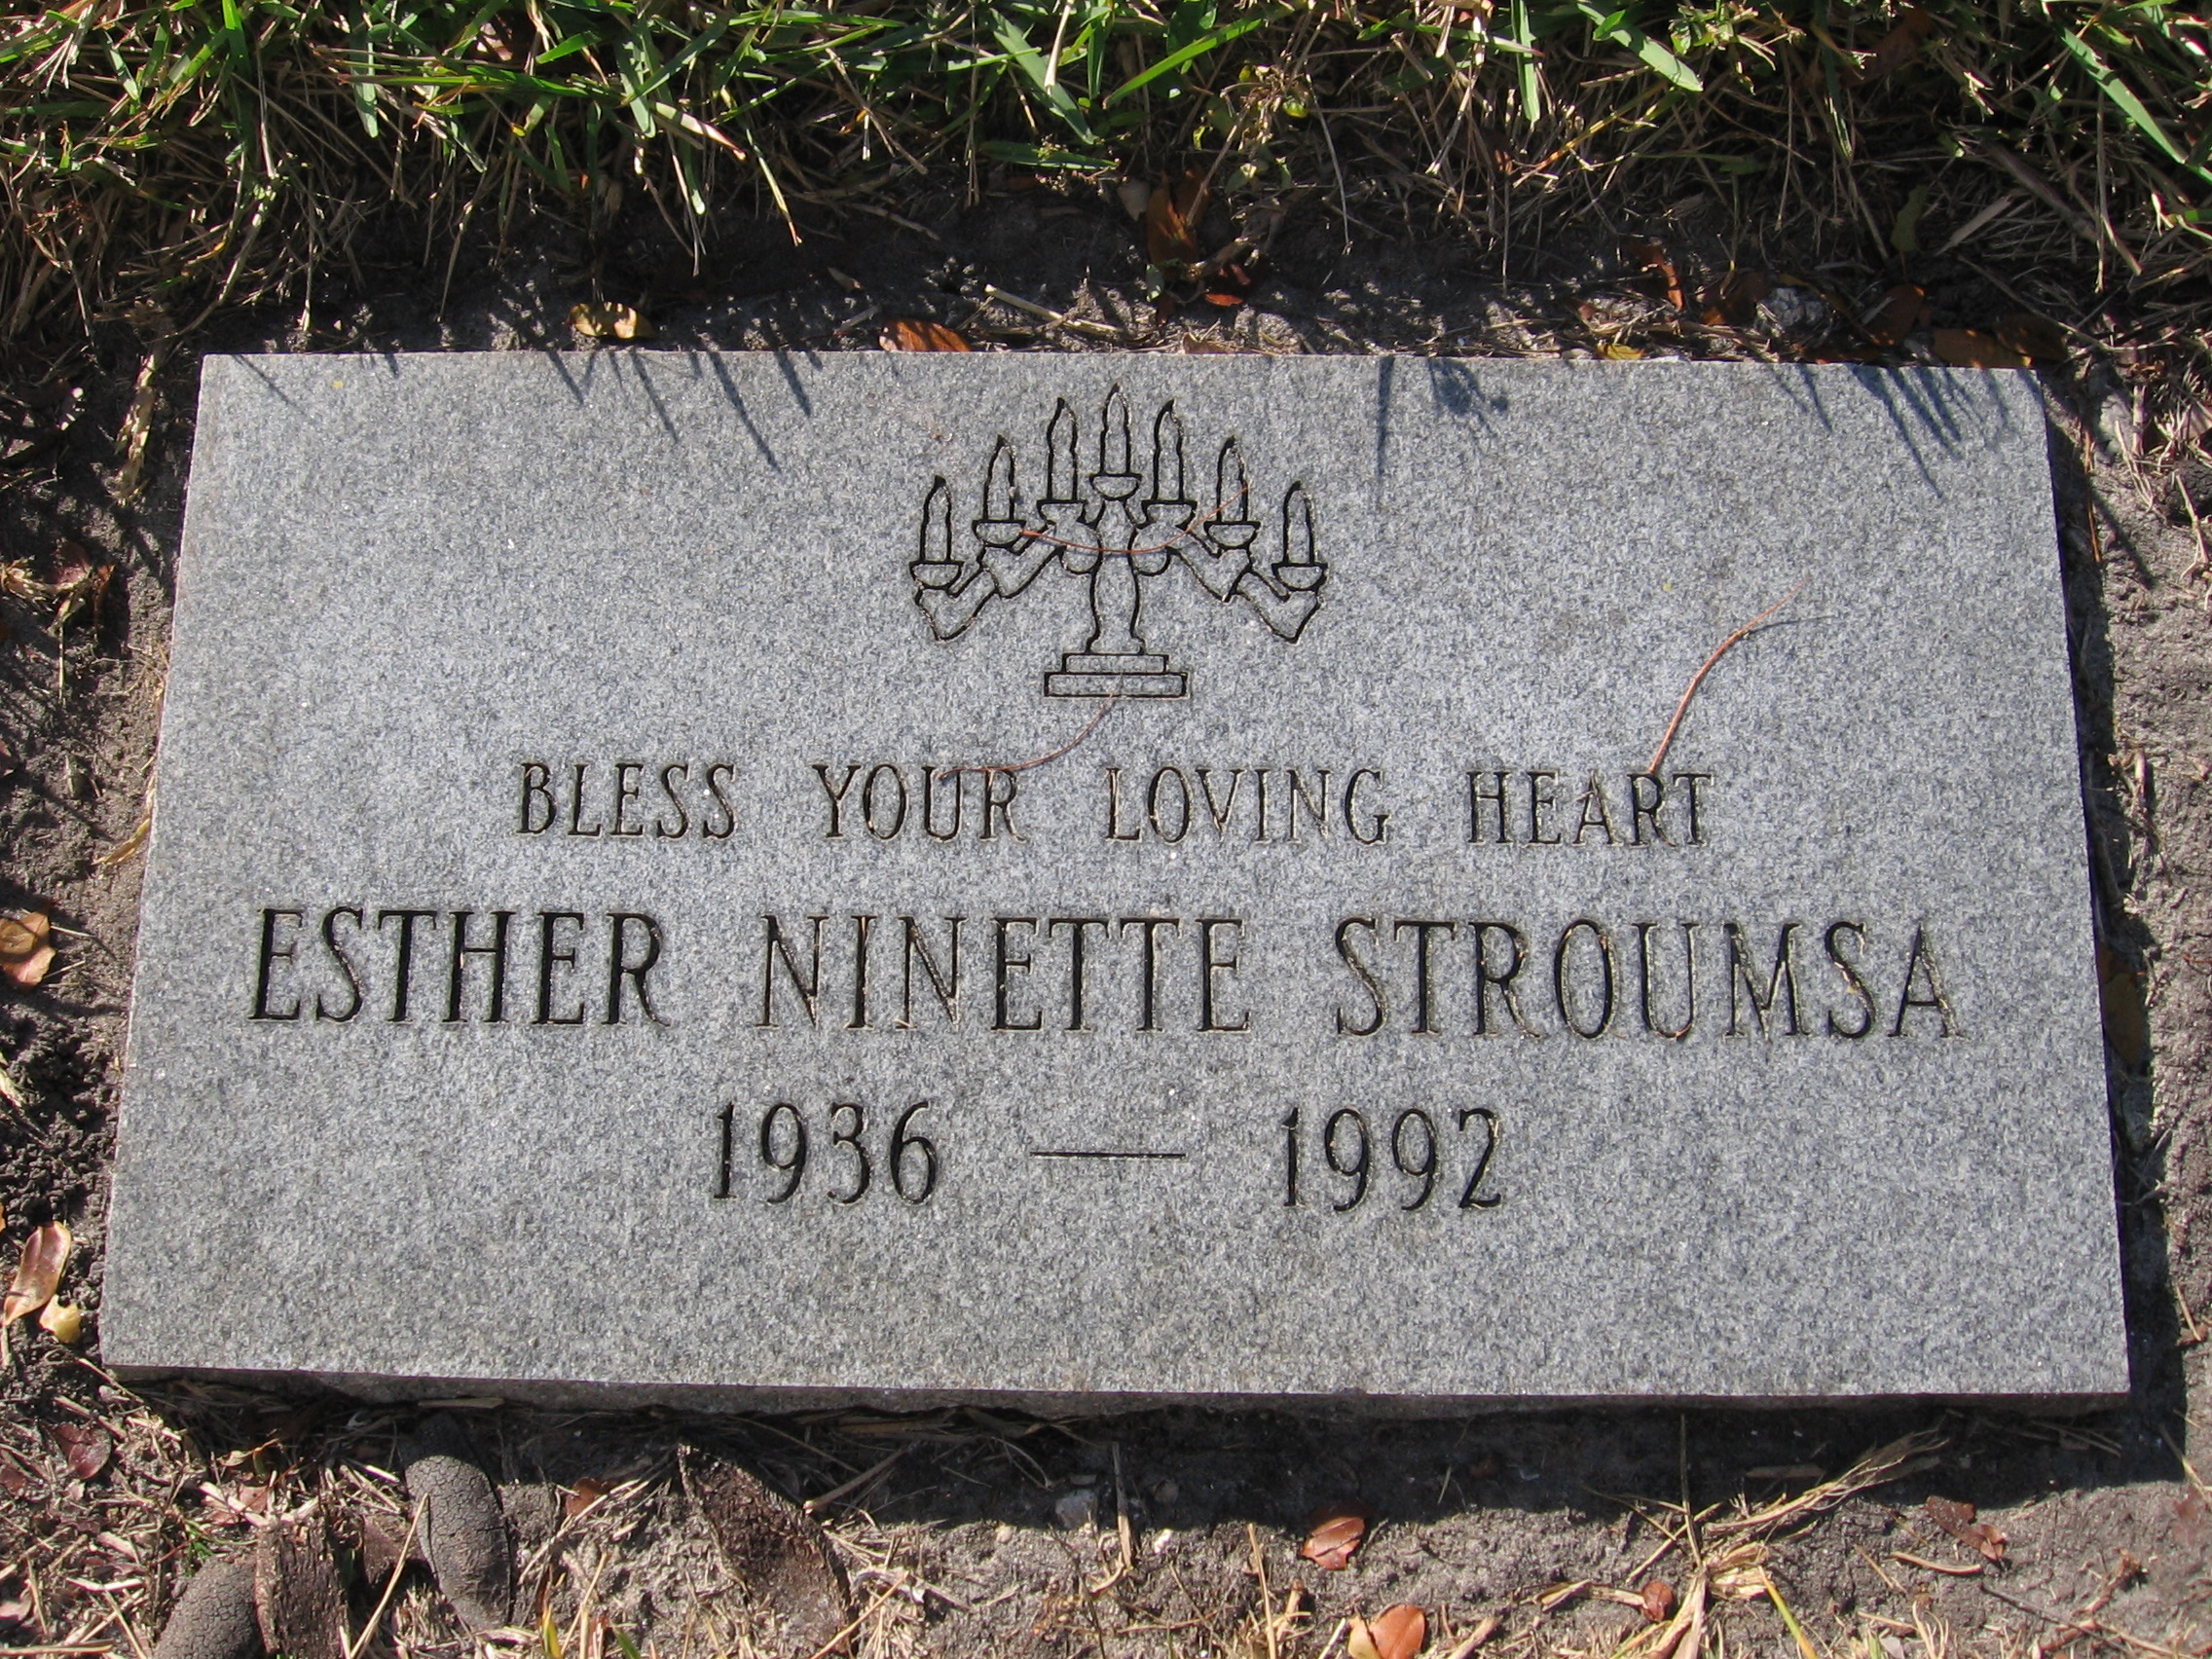 Esther Ninette Stroumsa